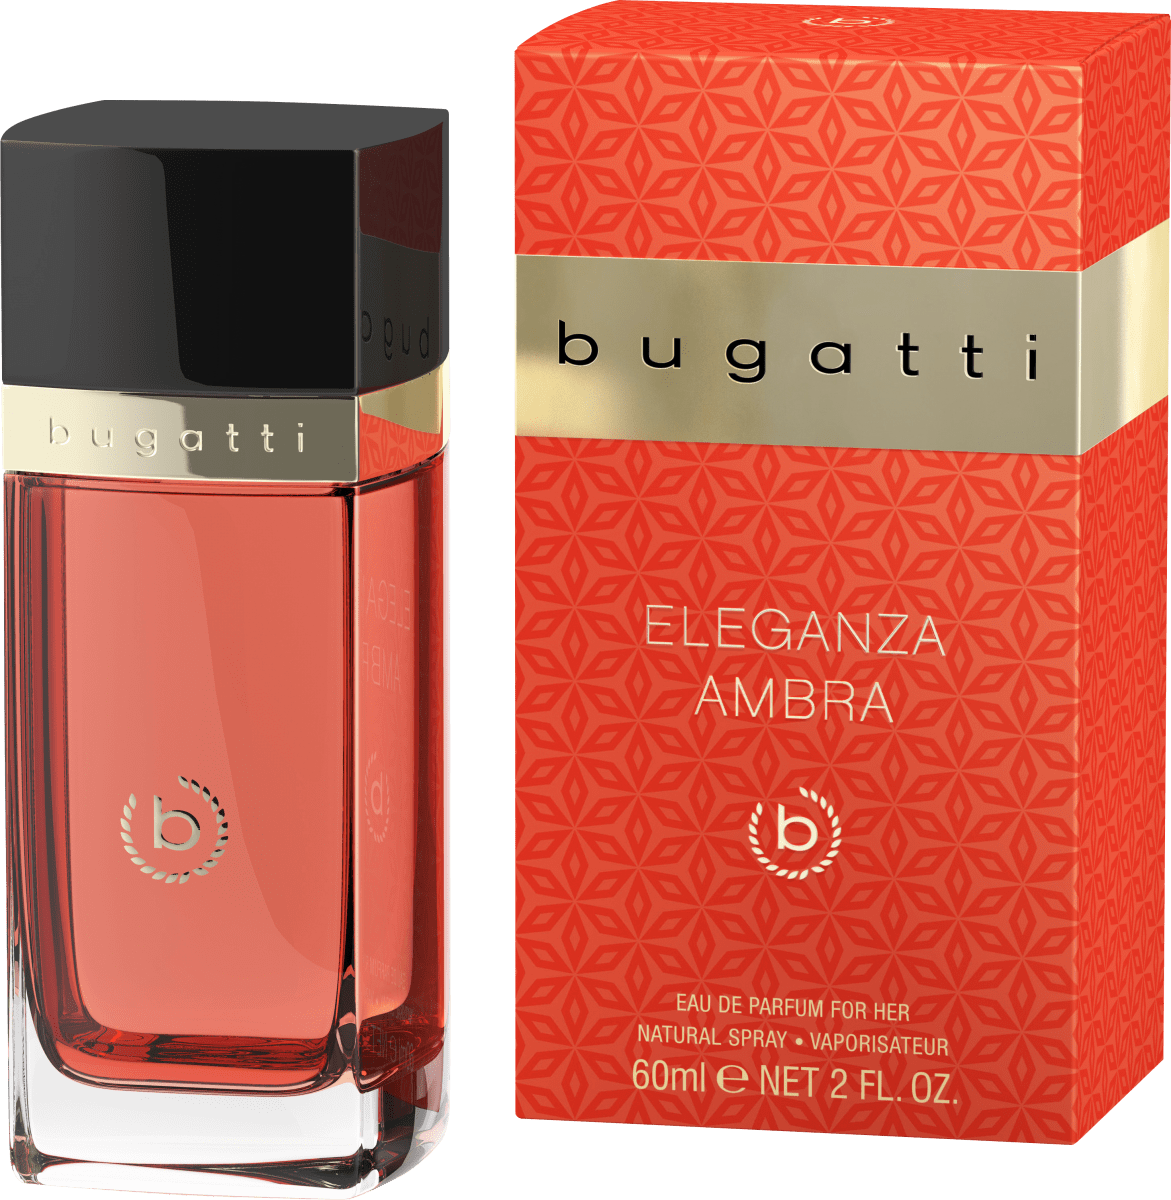 ml Ambra bugatti Eleganza Parfum, 60 Eau de